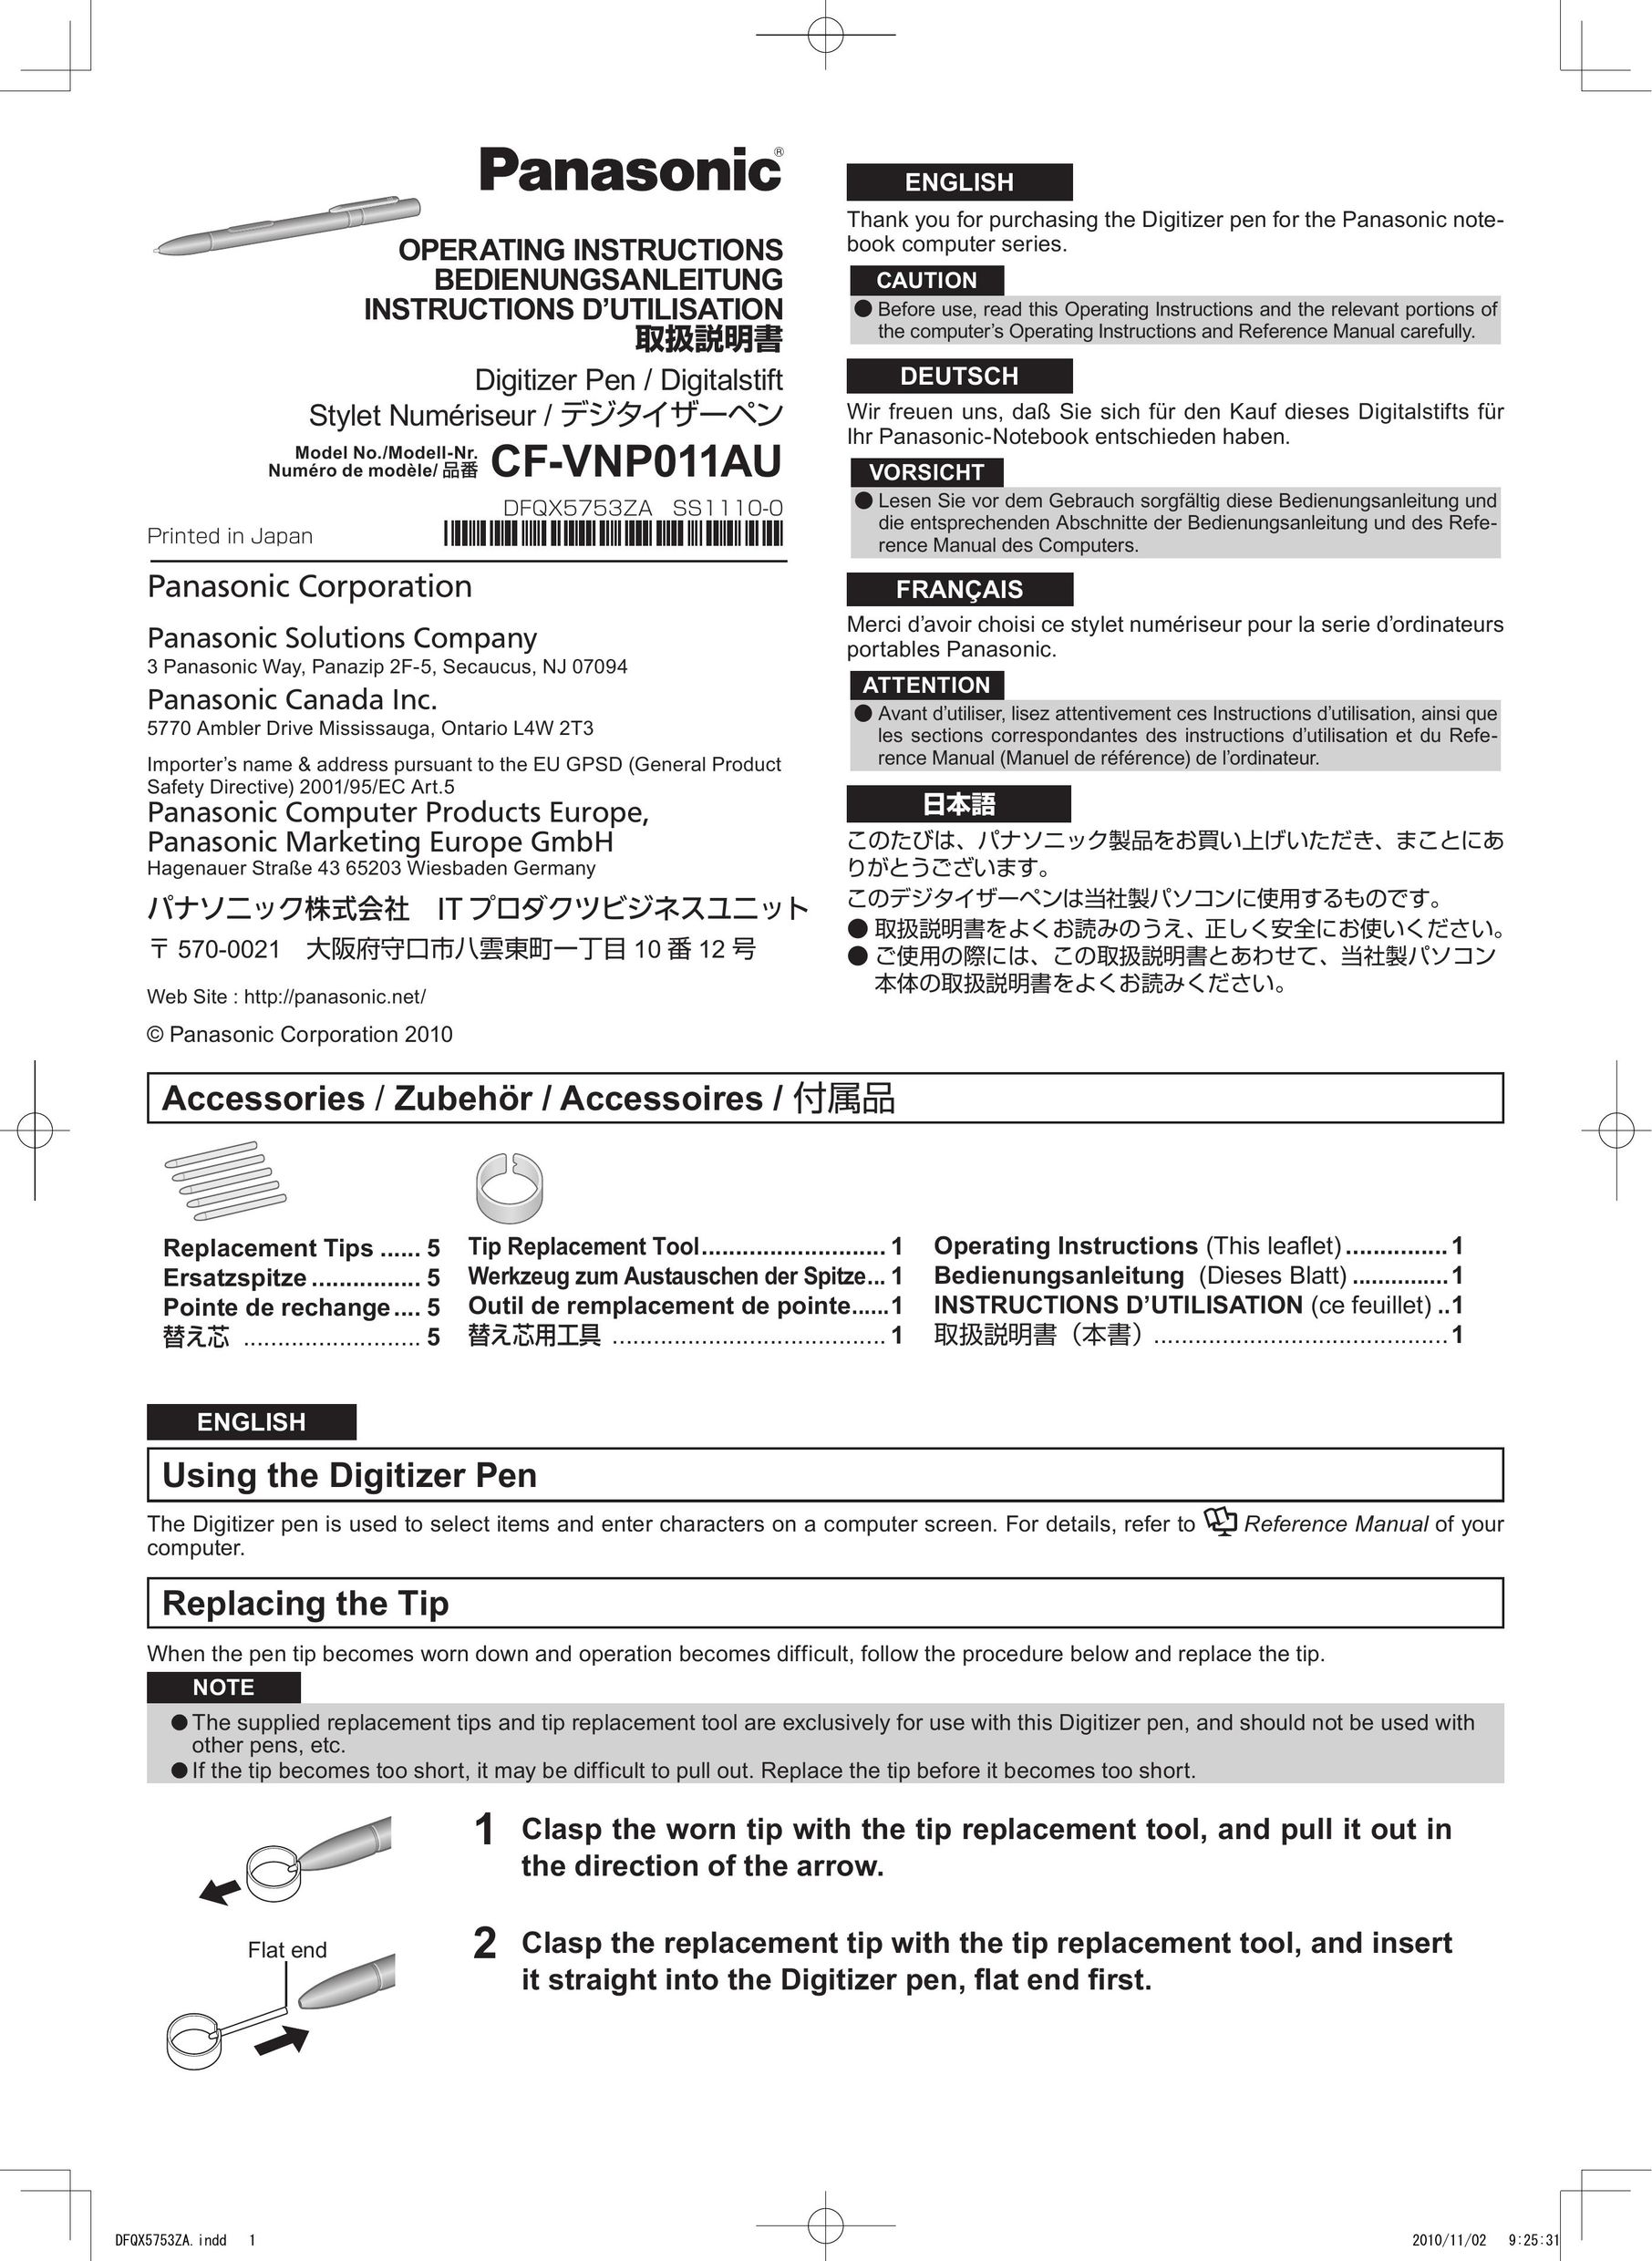 Panasonic CF-VNP011AU Computer Accessories User Manual